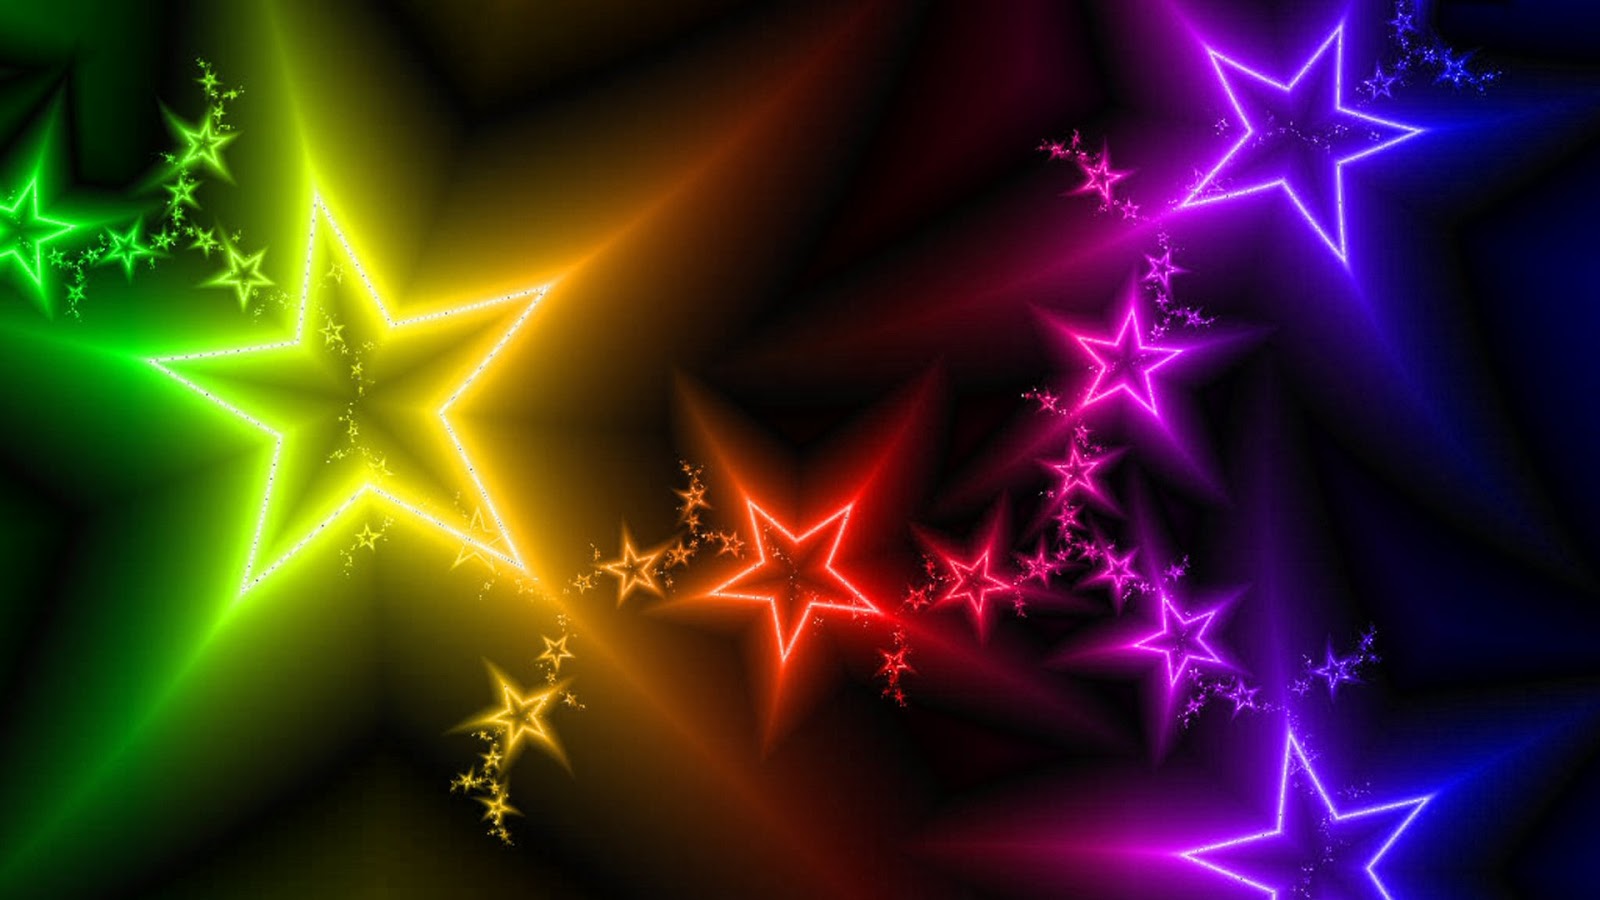 star wars moving wallpaper,fractal art,green,neon,light,star